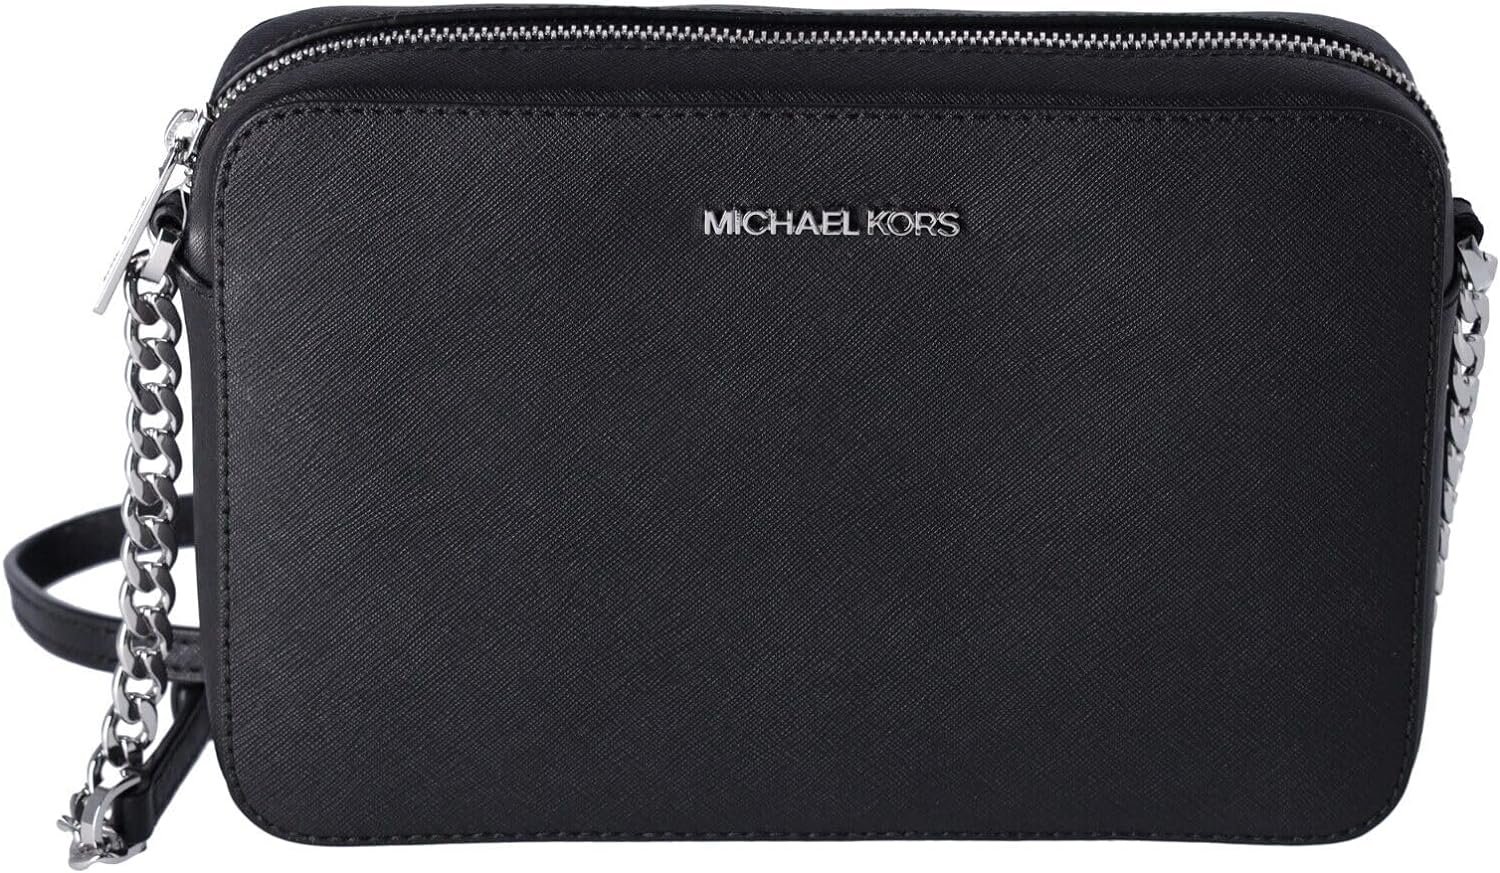 Michael Kors Womens Jet Set Item Crossbody Bag (black/silver)